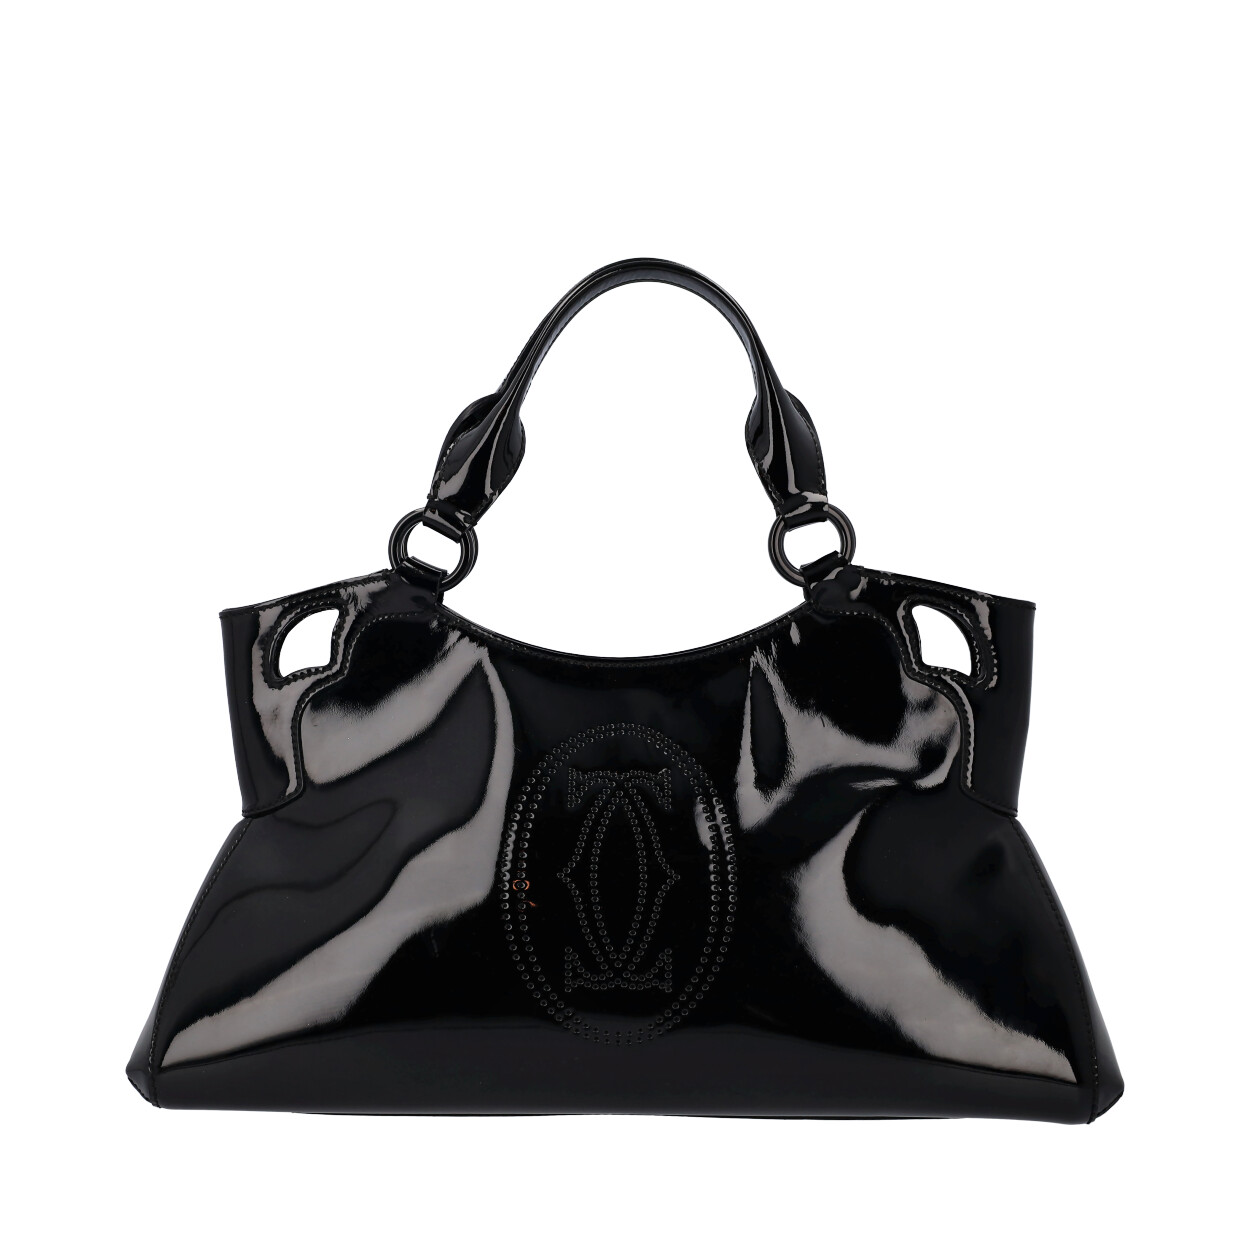 FonjepShops | look with a graphic crossbody bag | Cartier Marcello Handbag  366185